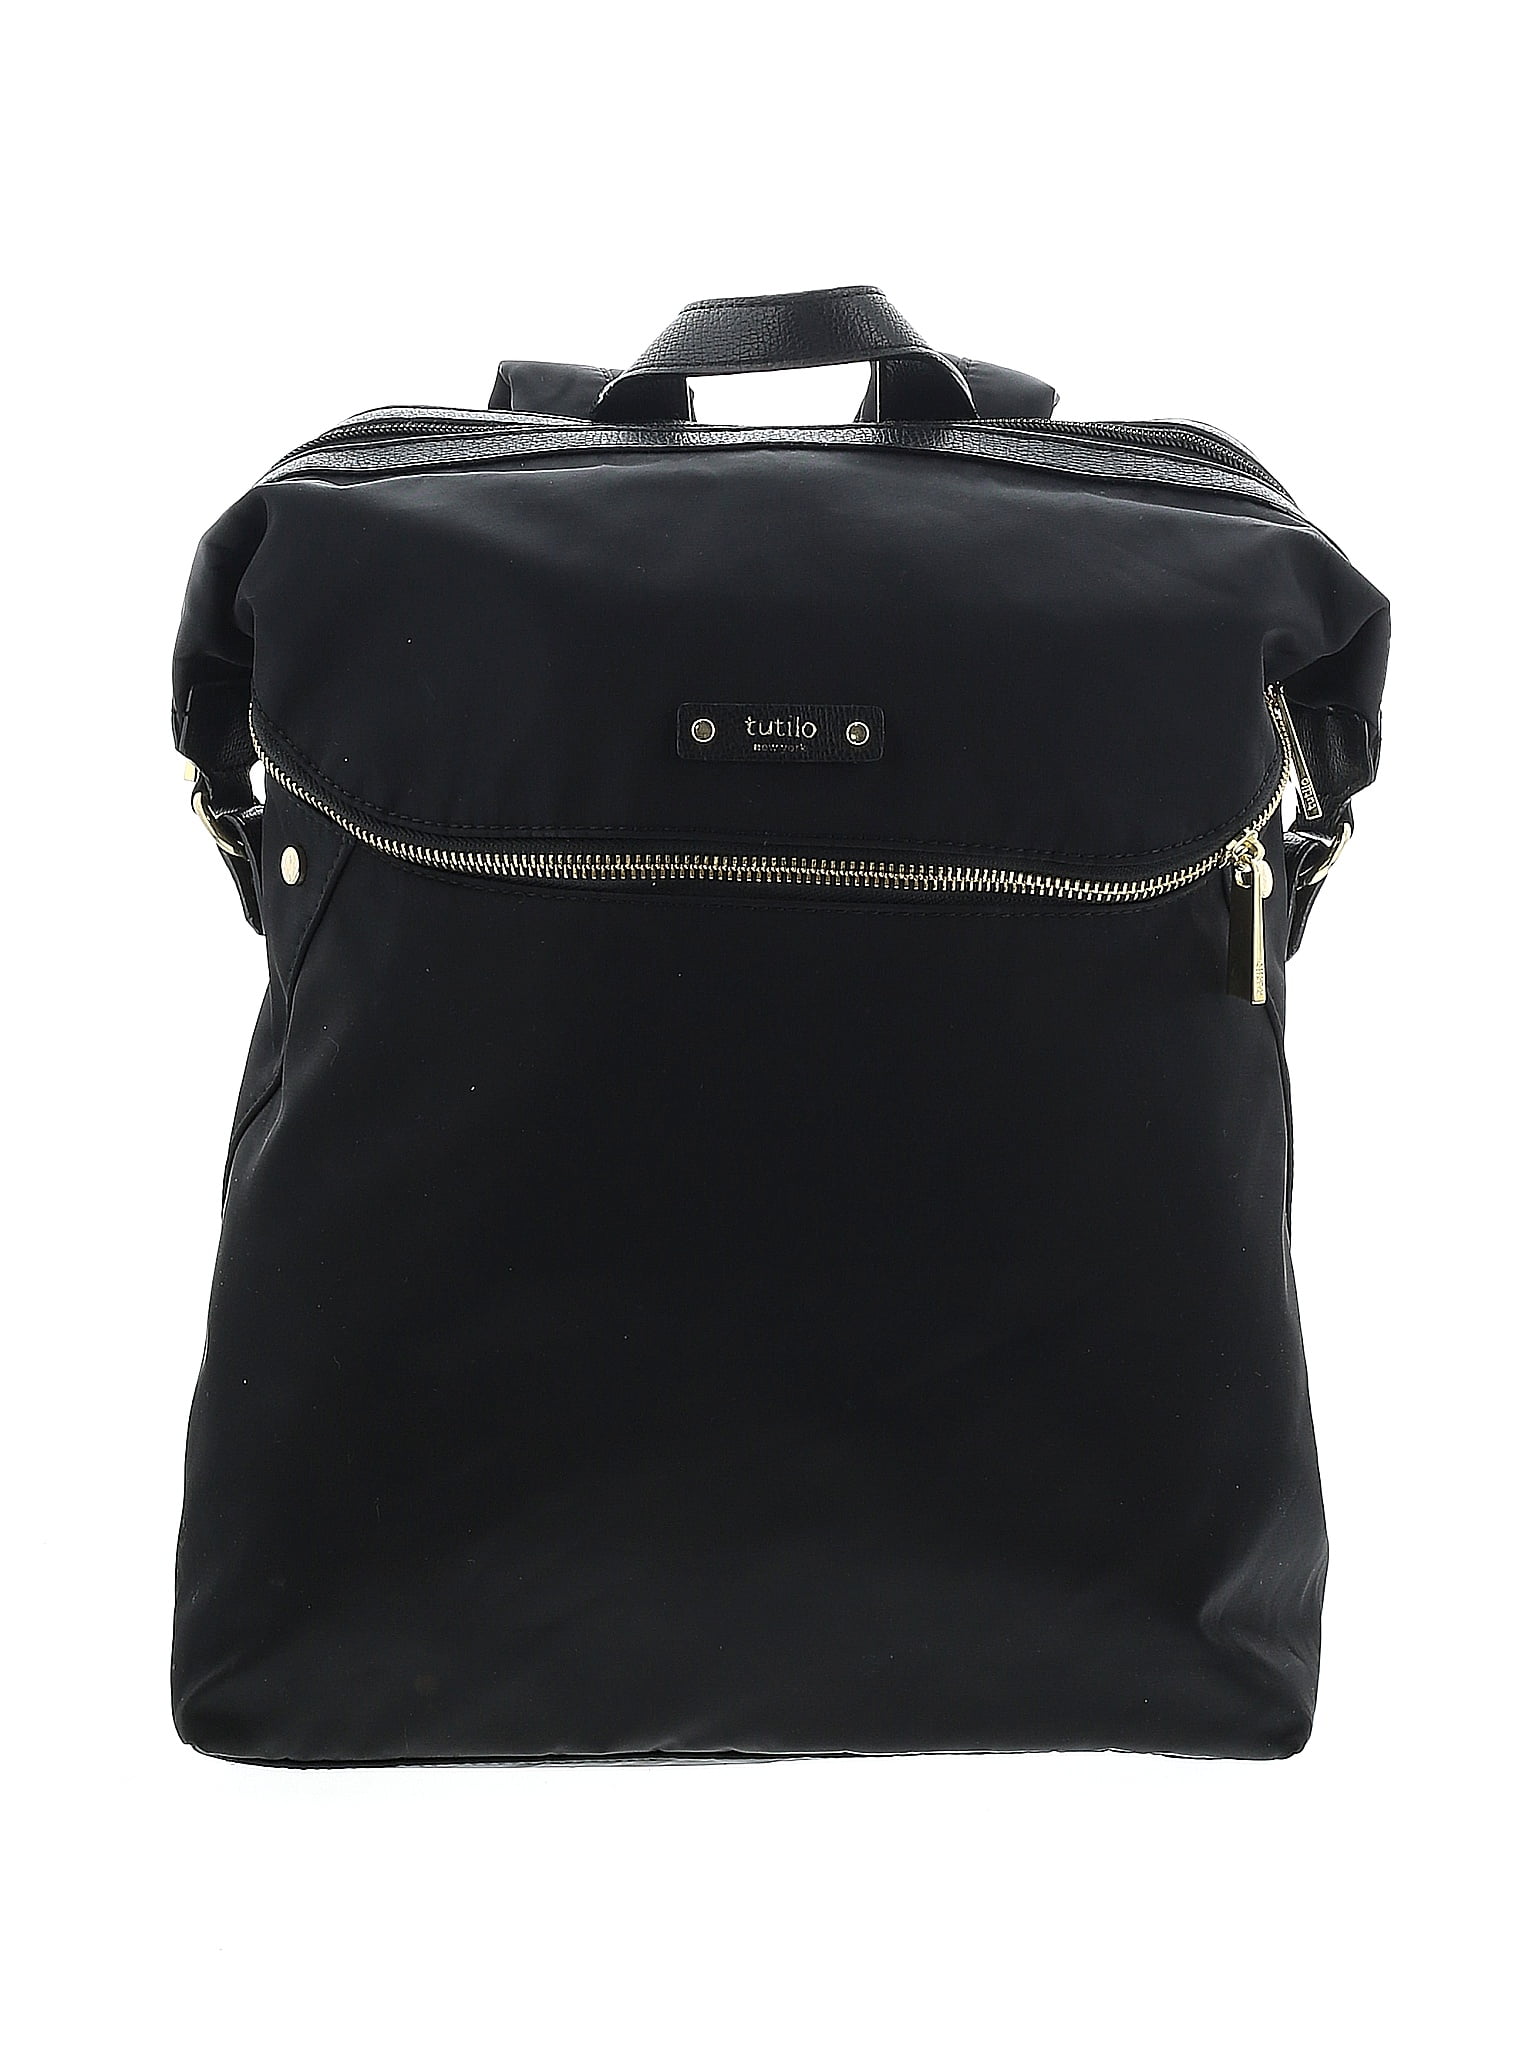 Tutilo Solid Black Backpack One Size - 67% off | thredUP